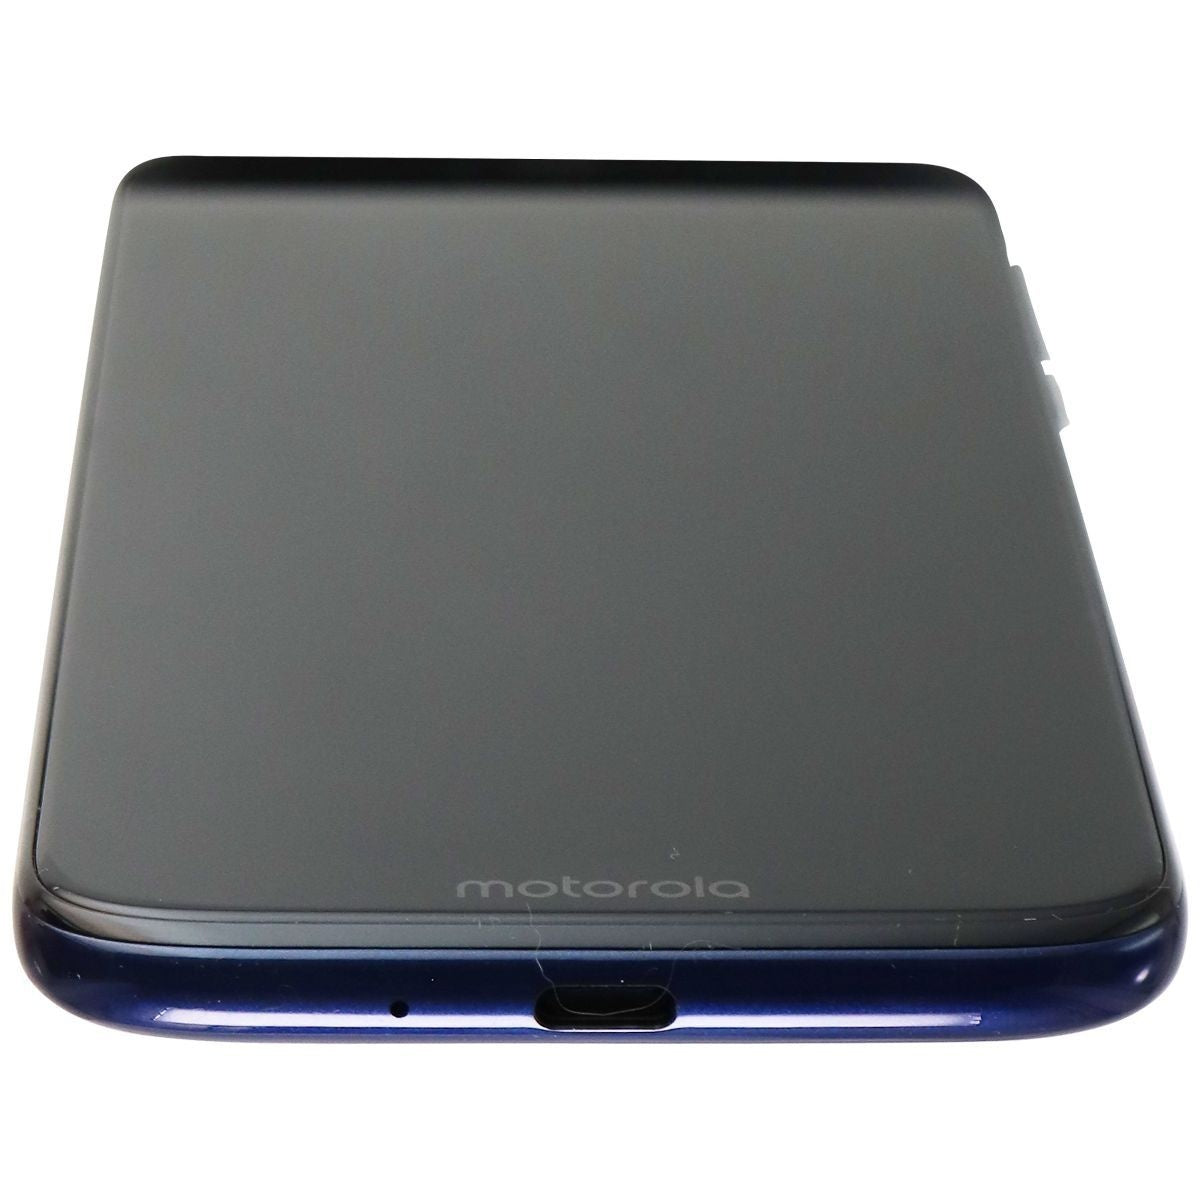 Motorola Moto G7 Power (6.2-in) (XT1955-5) UNLOCKED - 32GB / Marine Blue Cell Phones & Smartphones Motorola    - Simple Cell Bulk Wholesale Pricing - USA Seller